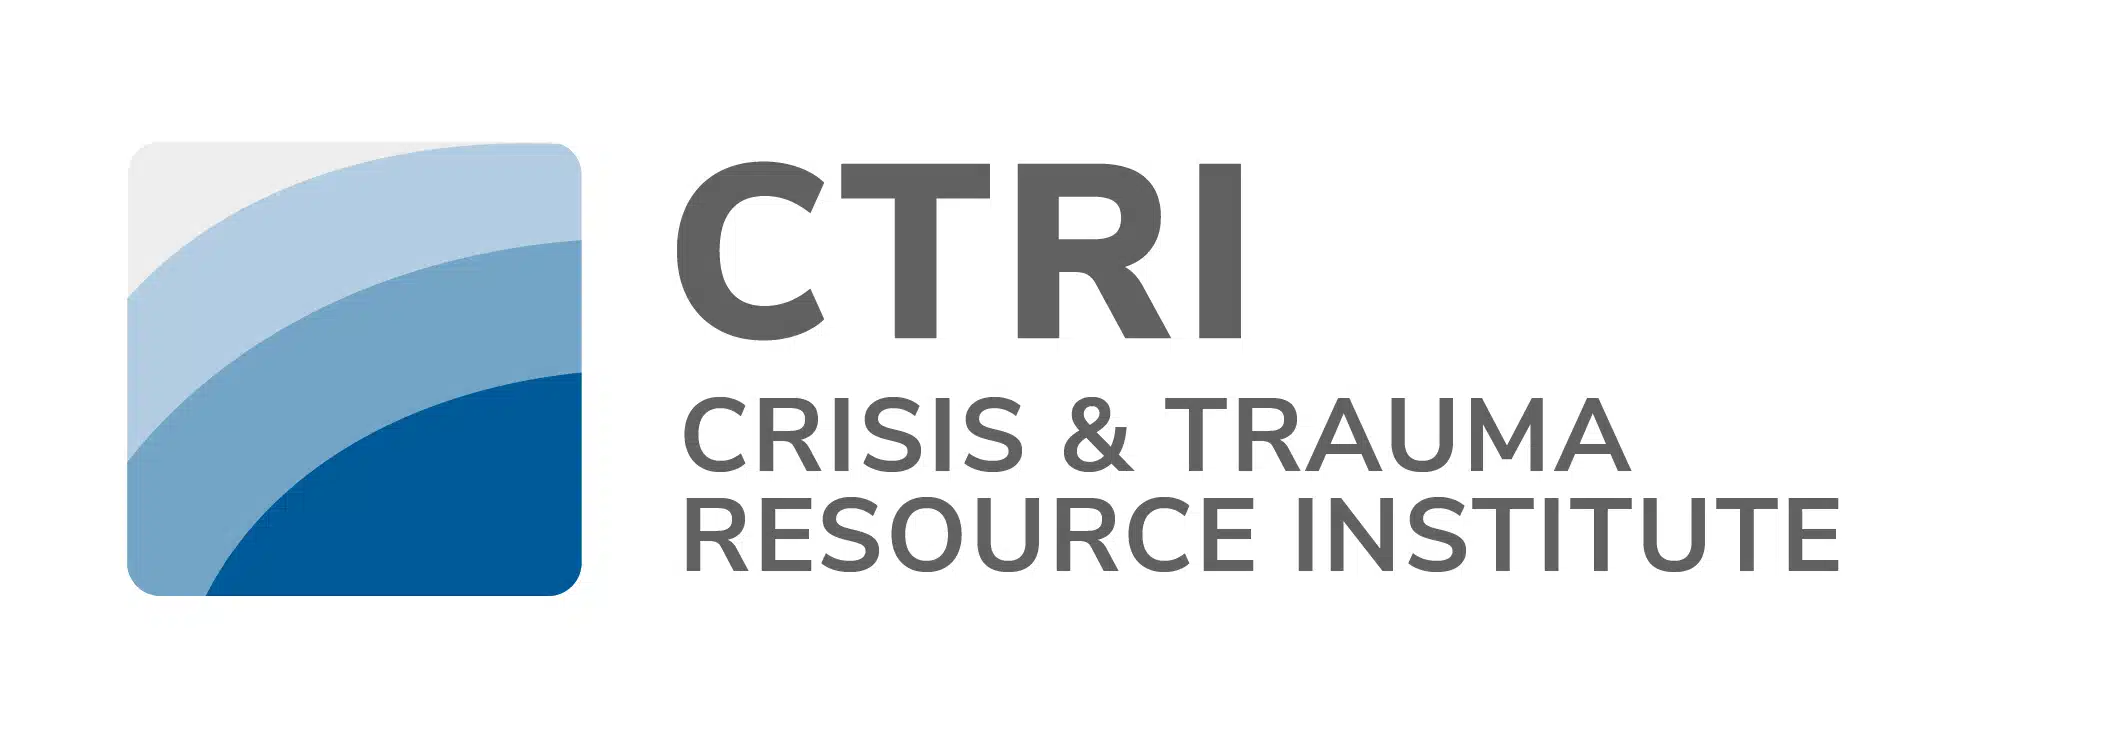 Crisis and Trauma Resource Institute CTRI logo